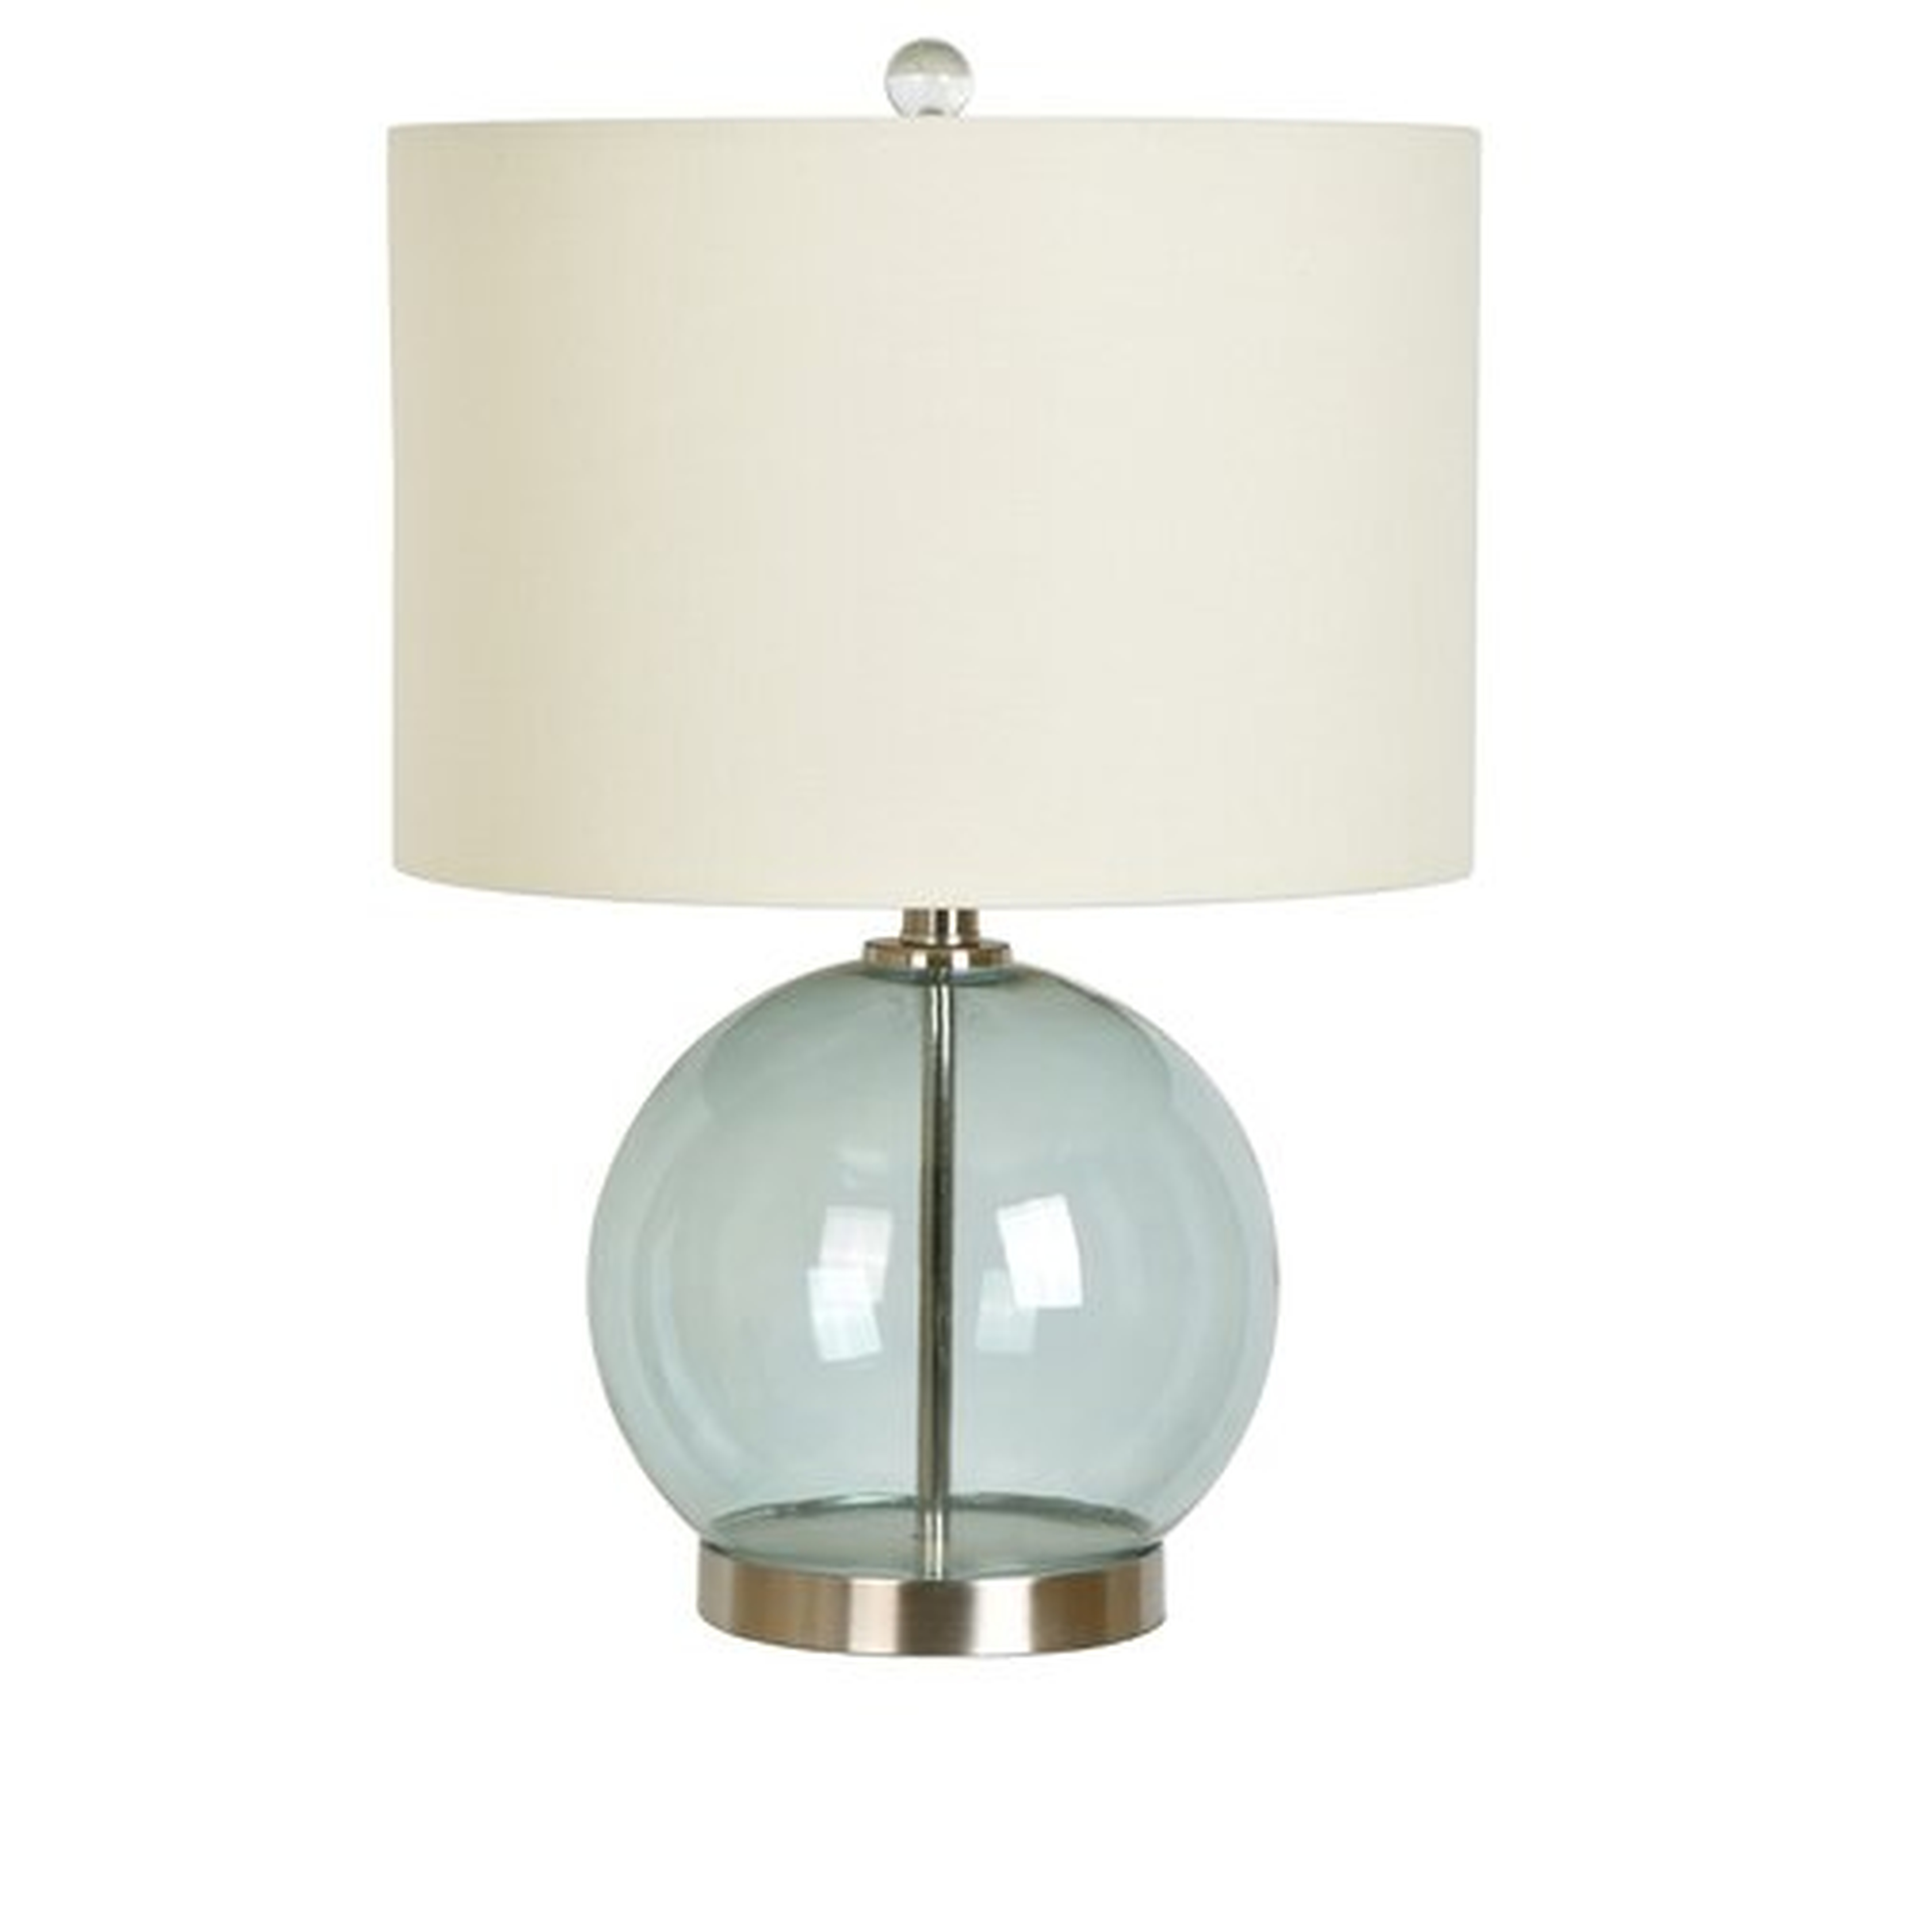 Matherne 21" Table Lamp - Transparent Seafoam Blue/Silver, Off-White - Wayfair